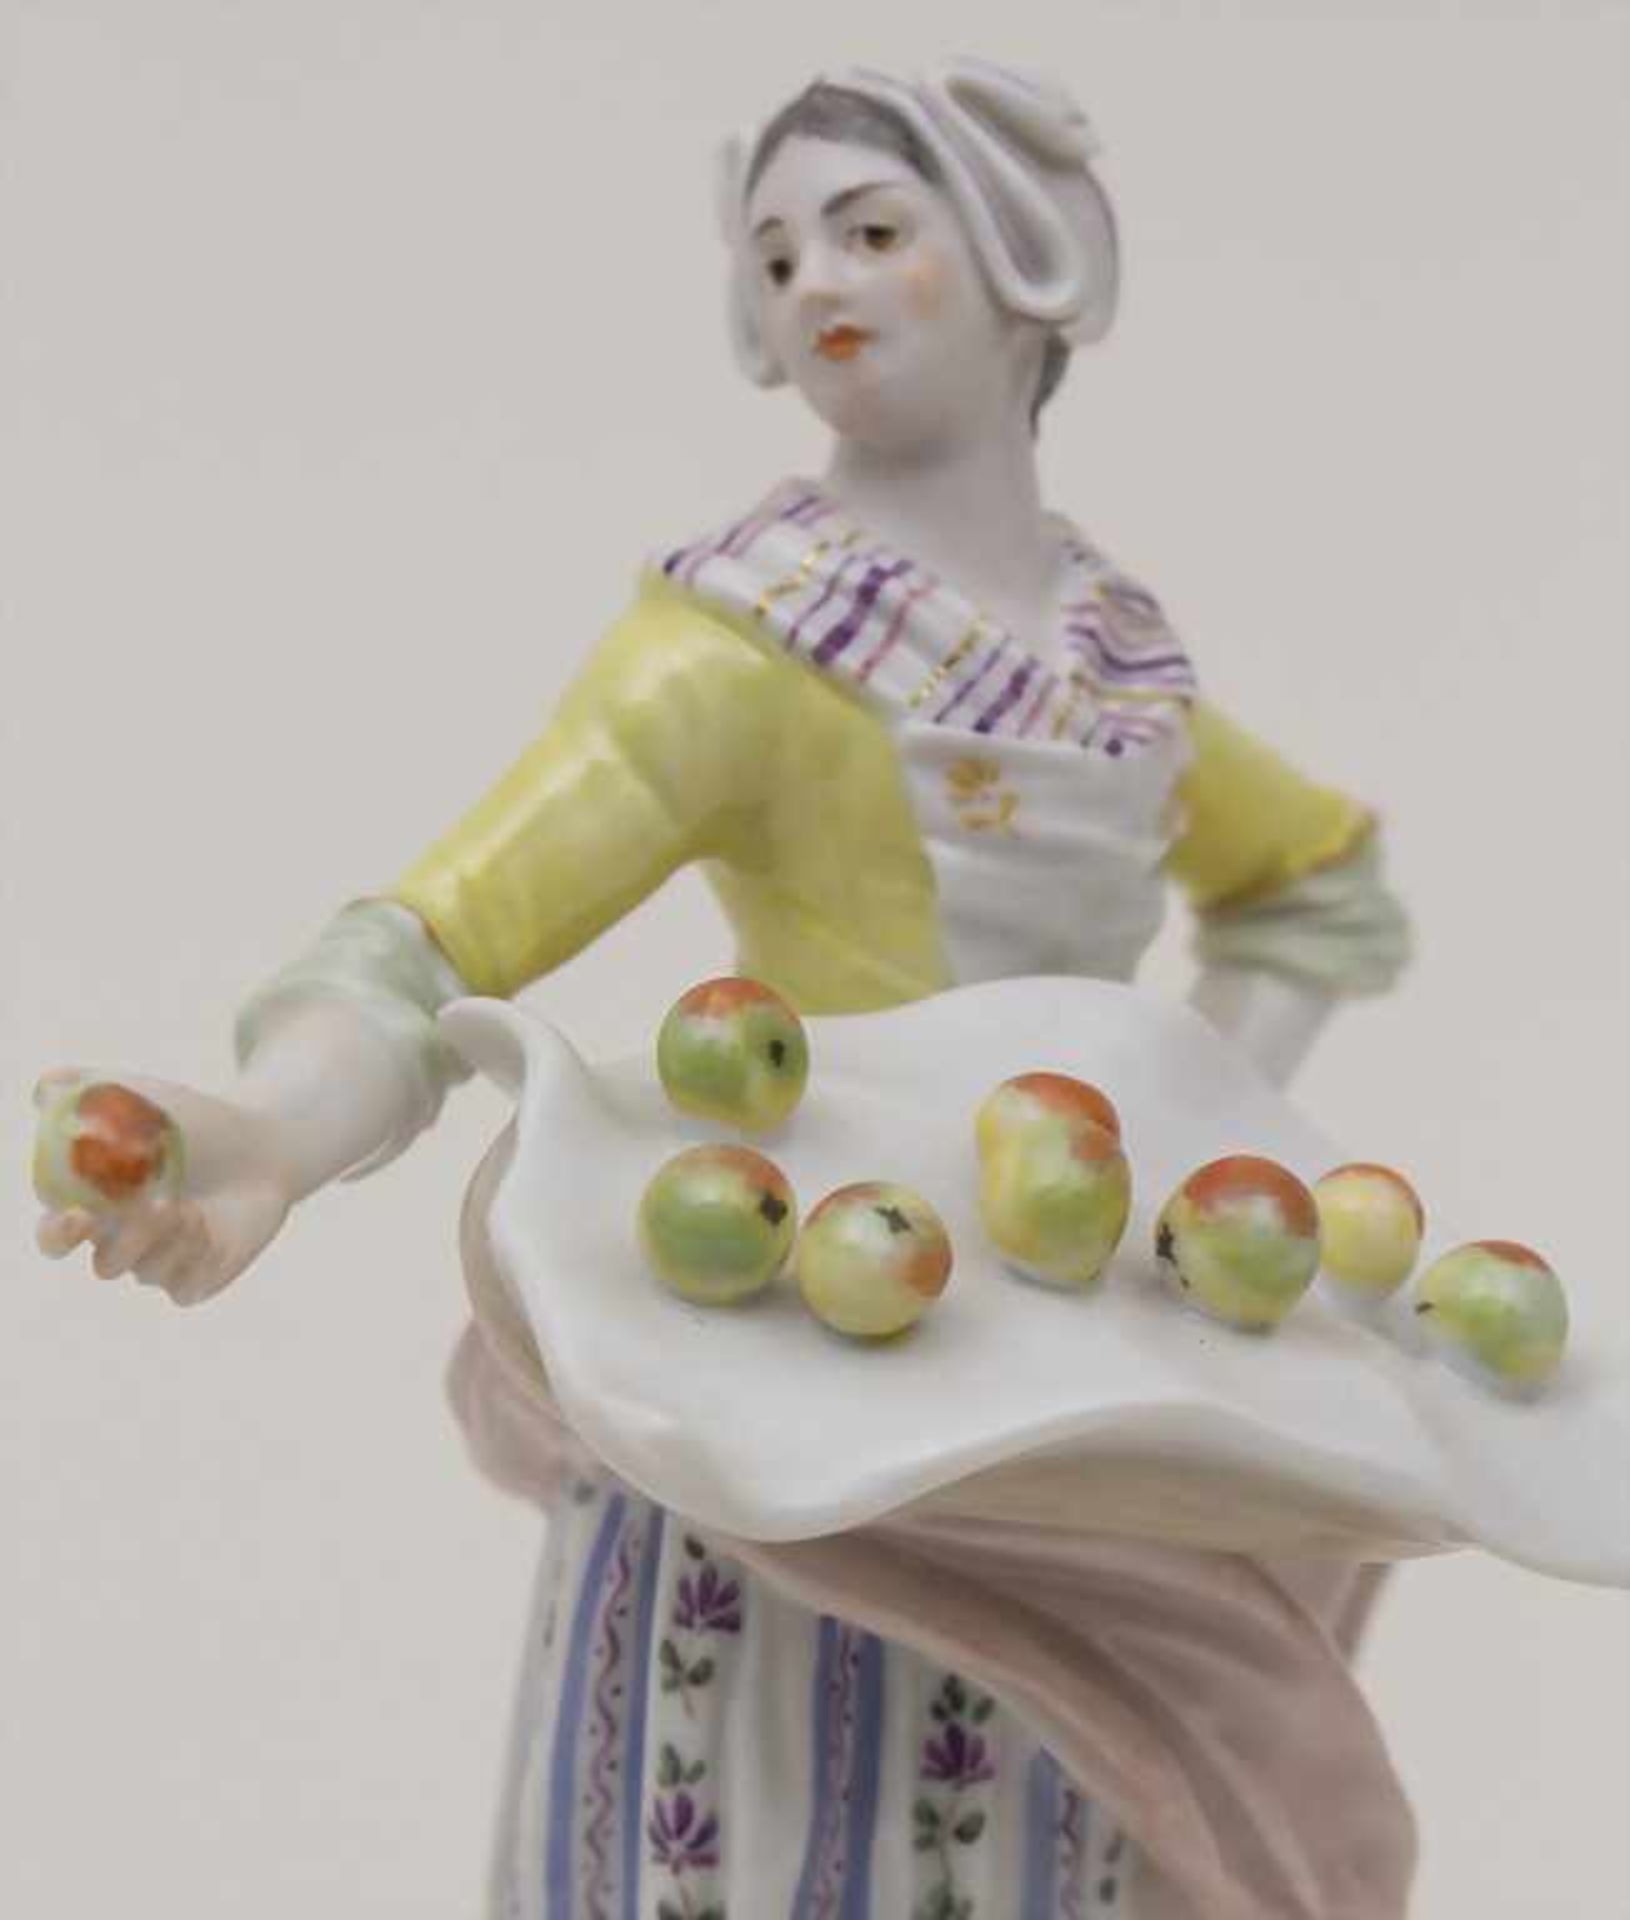 Apfelverkäuferin aus der Serie der Pariser Ausrufer / Cris de Paris / An apple seller / A Parisian - Bild 7 aus 7